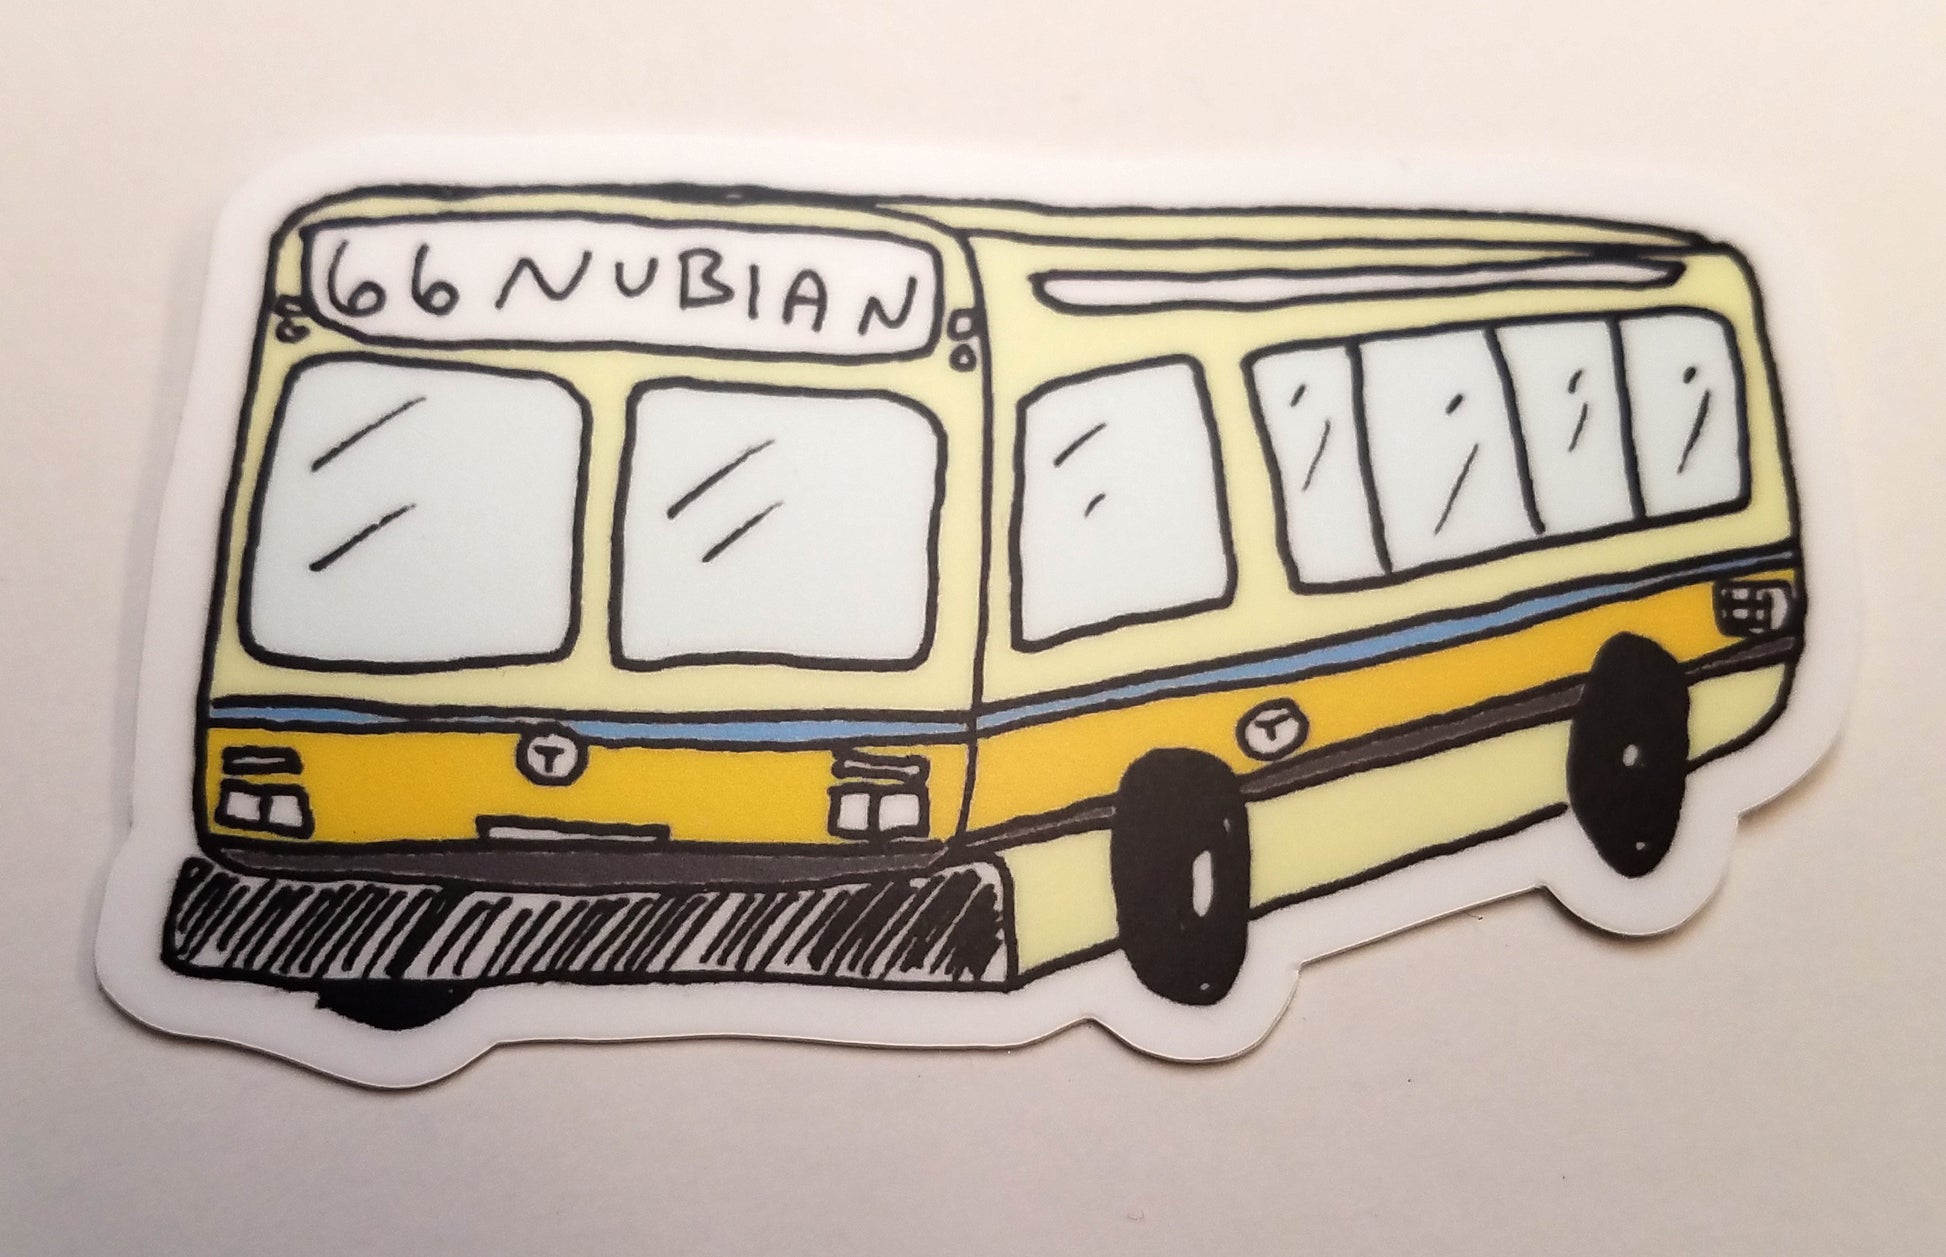 MBTA Bus Sticker: 66 Nubian